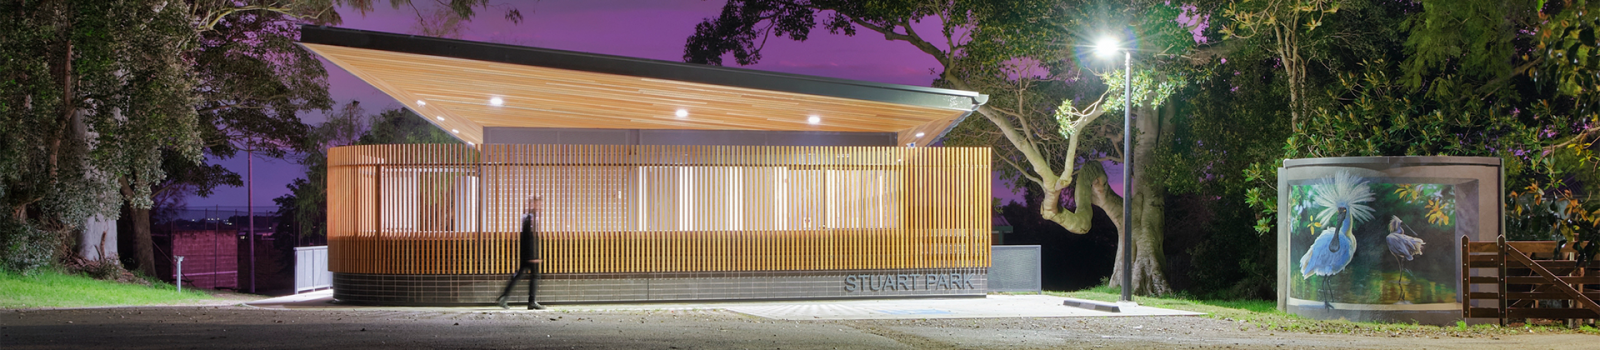 Stuart Park wins NSW architecture award banner image